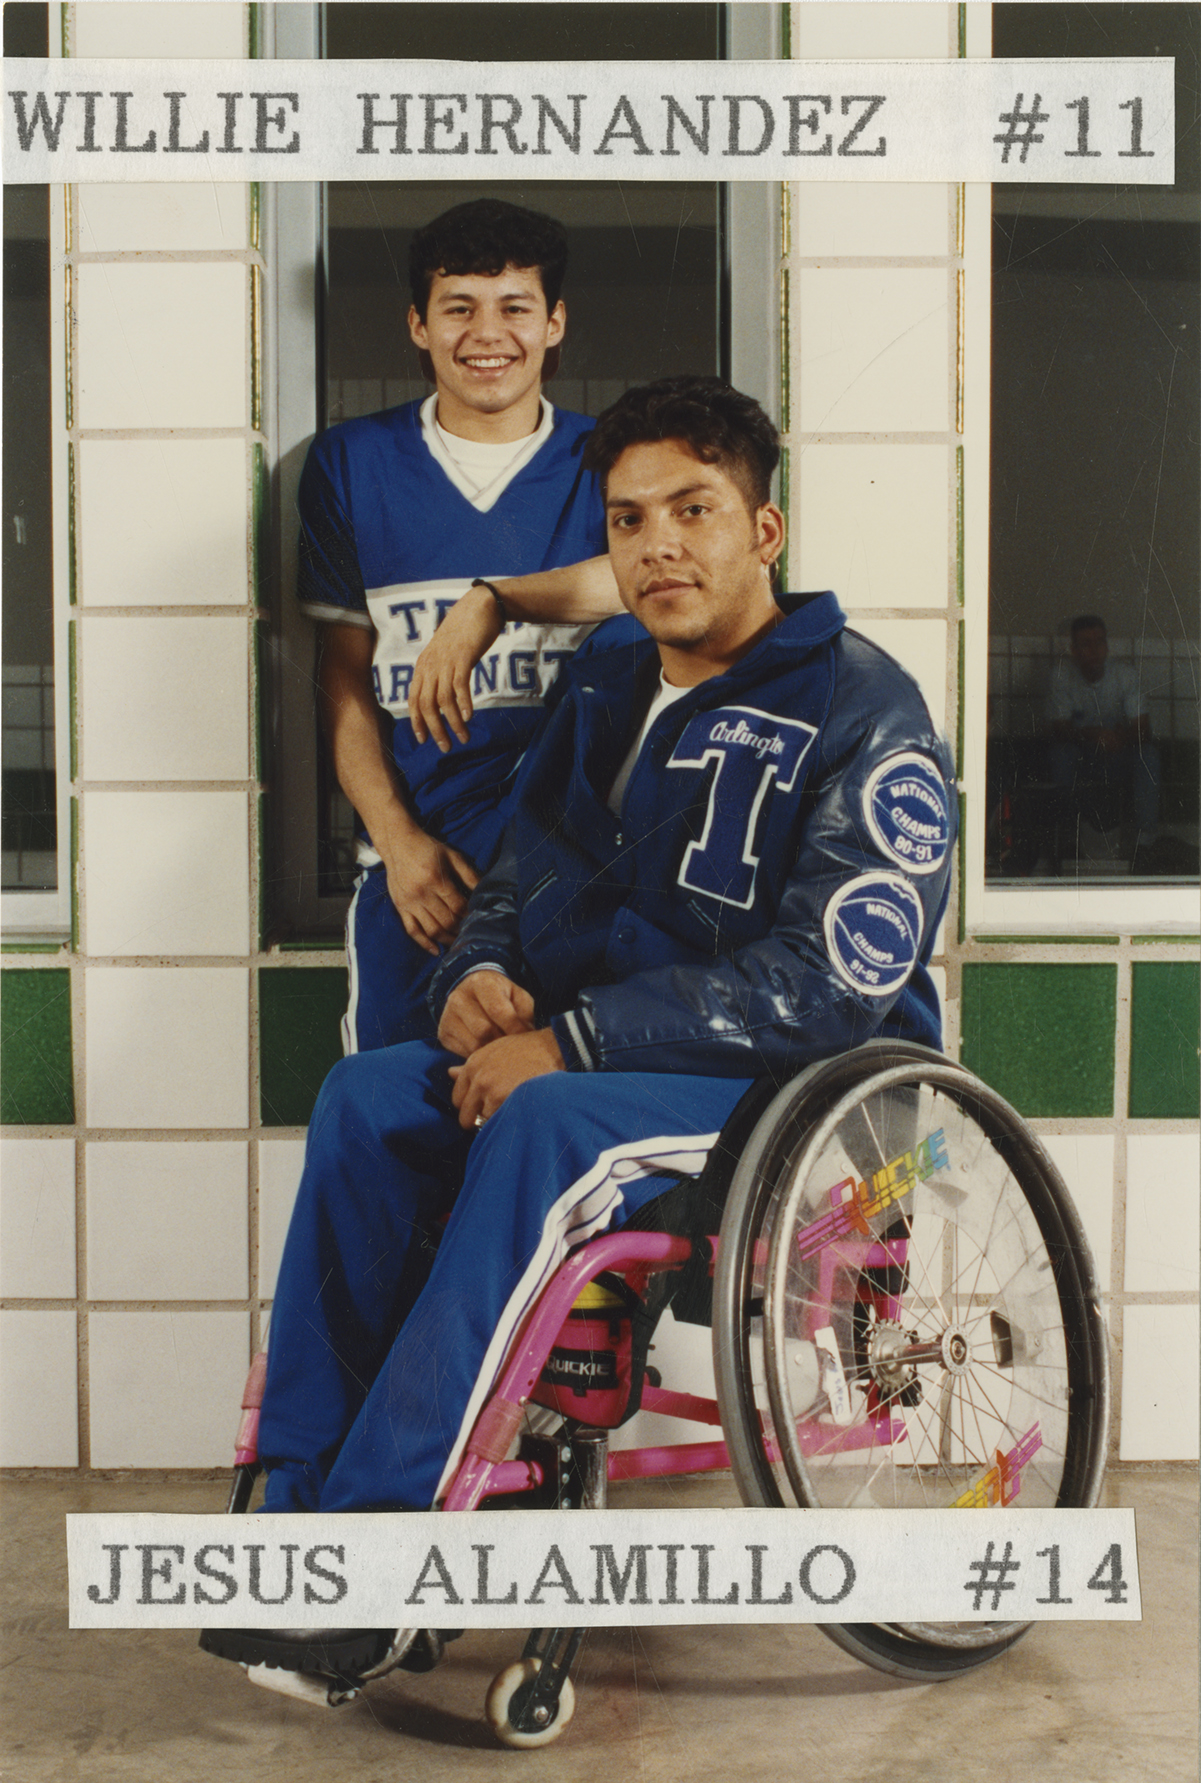 Color photograph of University of Texas at Arlington Movin' Mavs basketball players Willie Hernandez and Jesus Alamillo